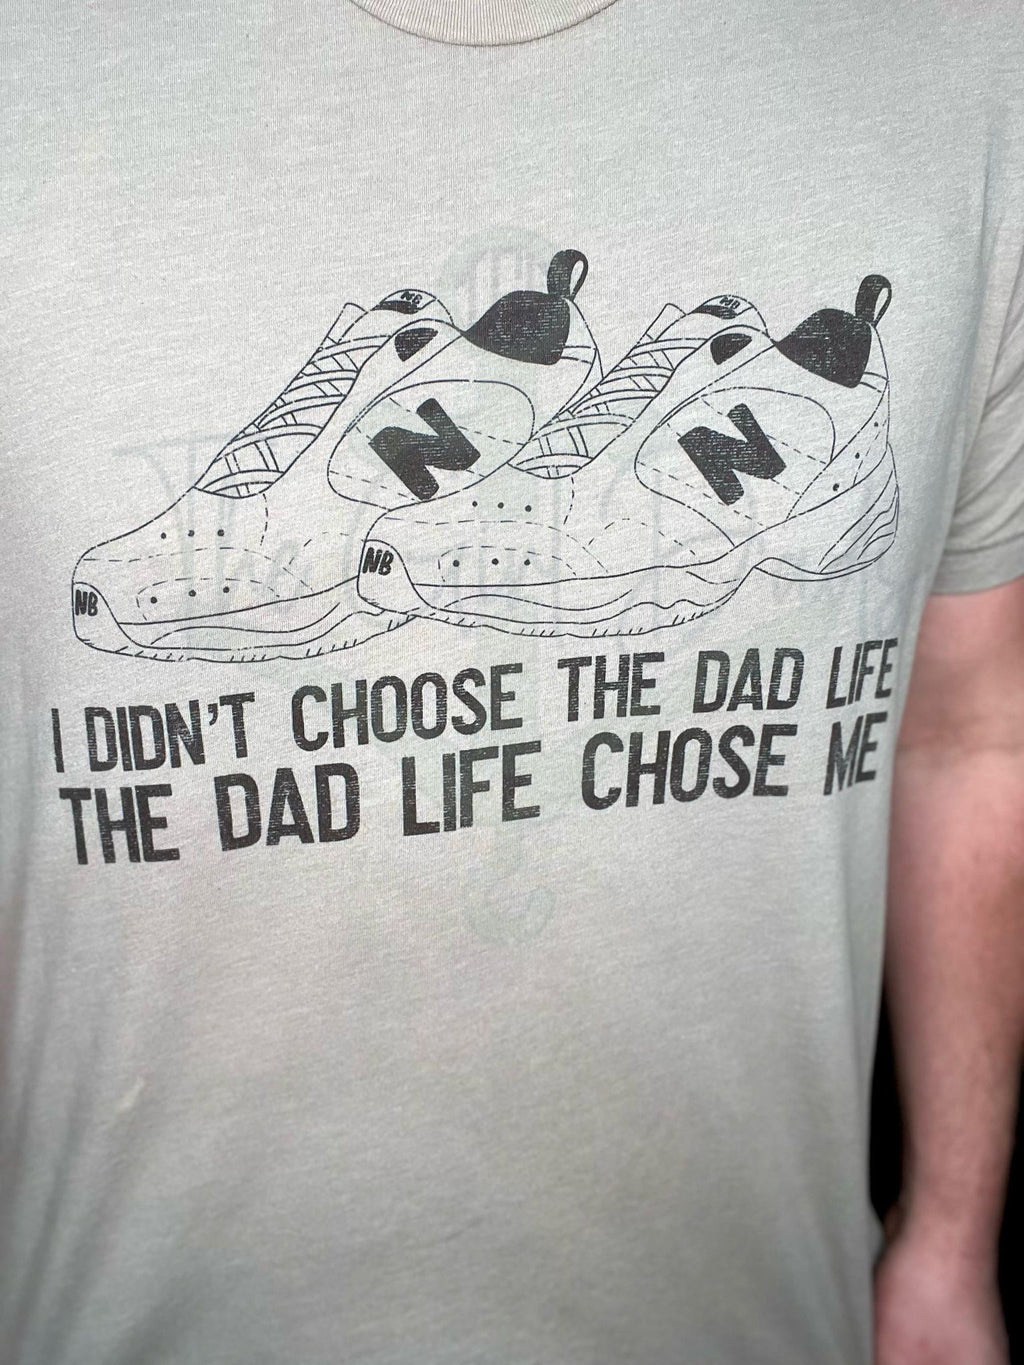 The Dad Life Chose Me Top Design